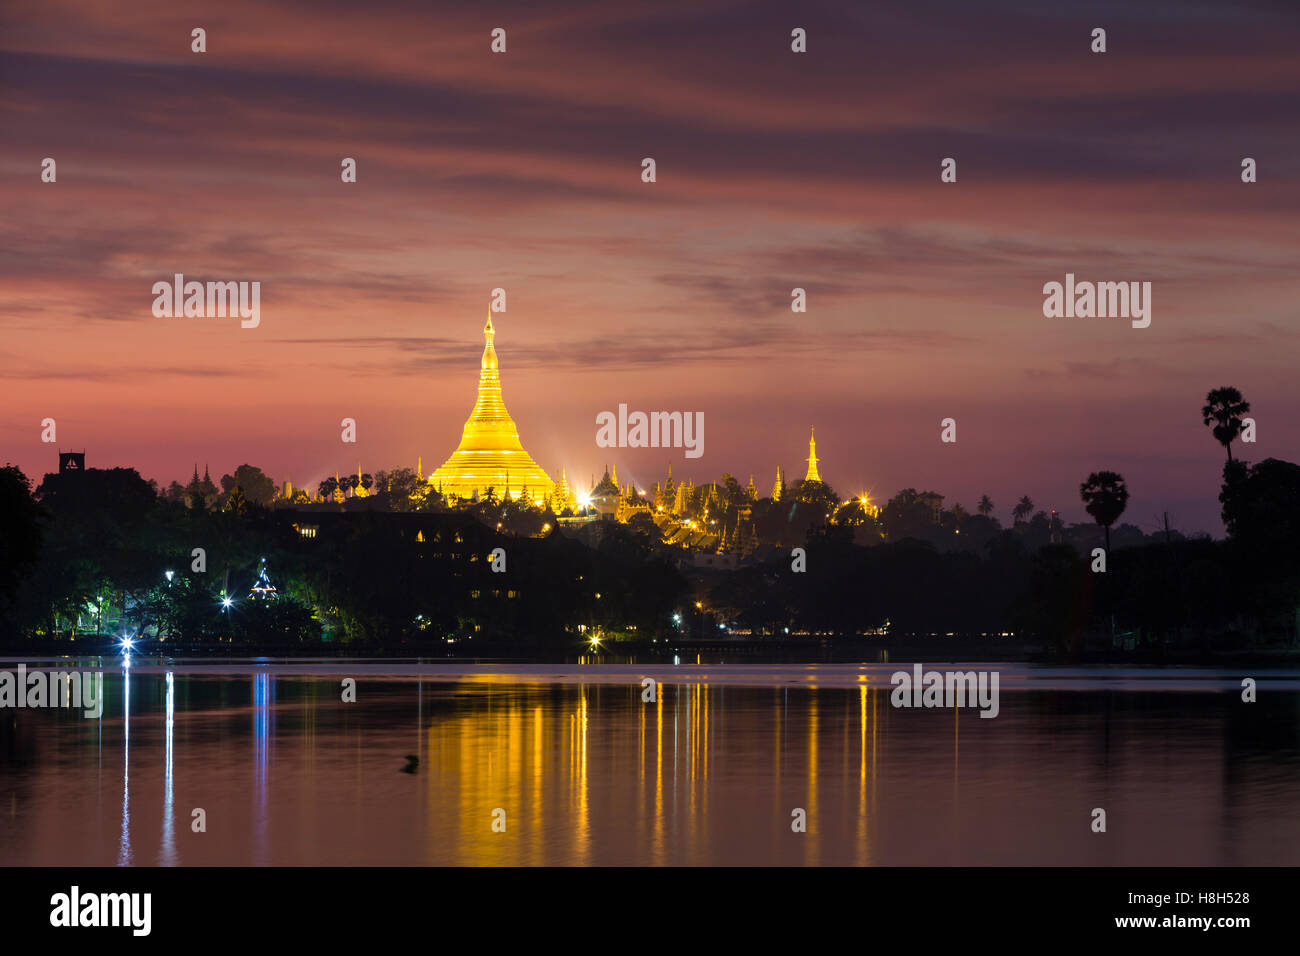 Shwedagon pagoda at sunset, as seen from Kandawgyi lake, Yangon, Myanmar Stock Photo